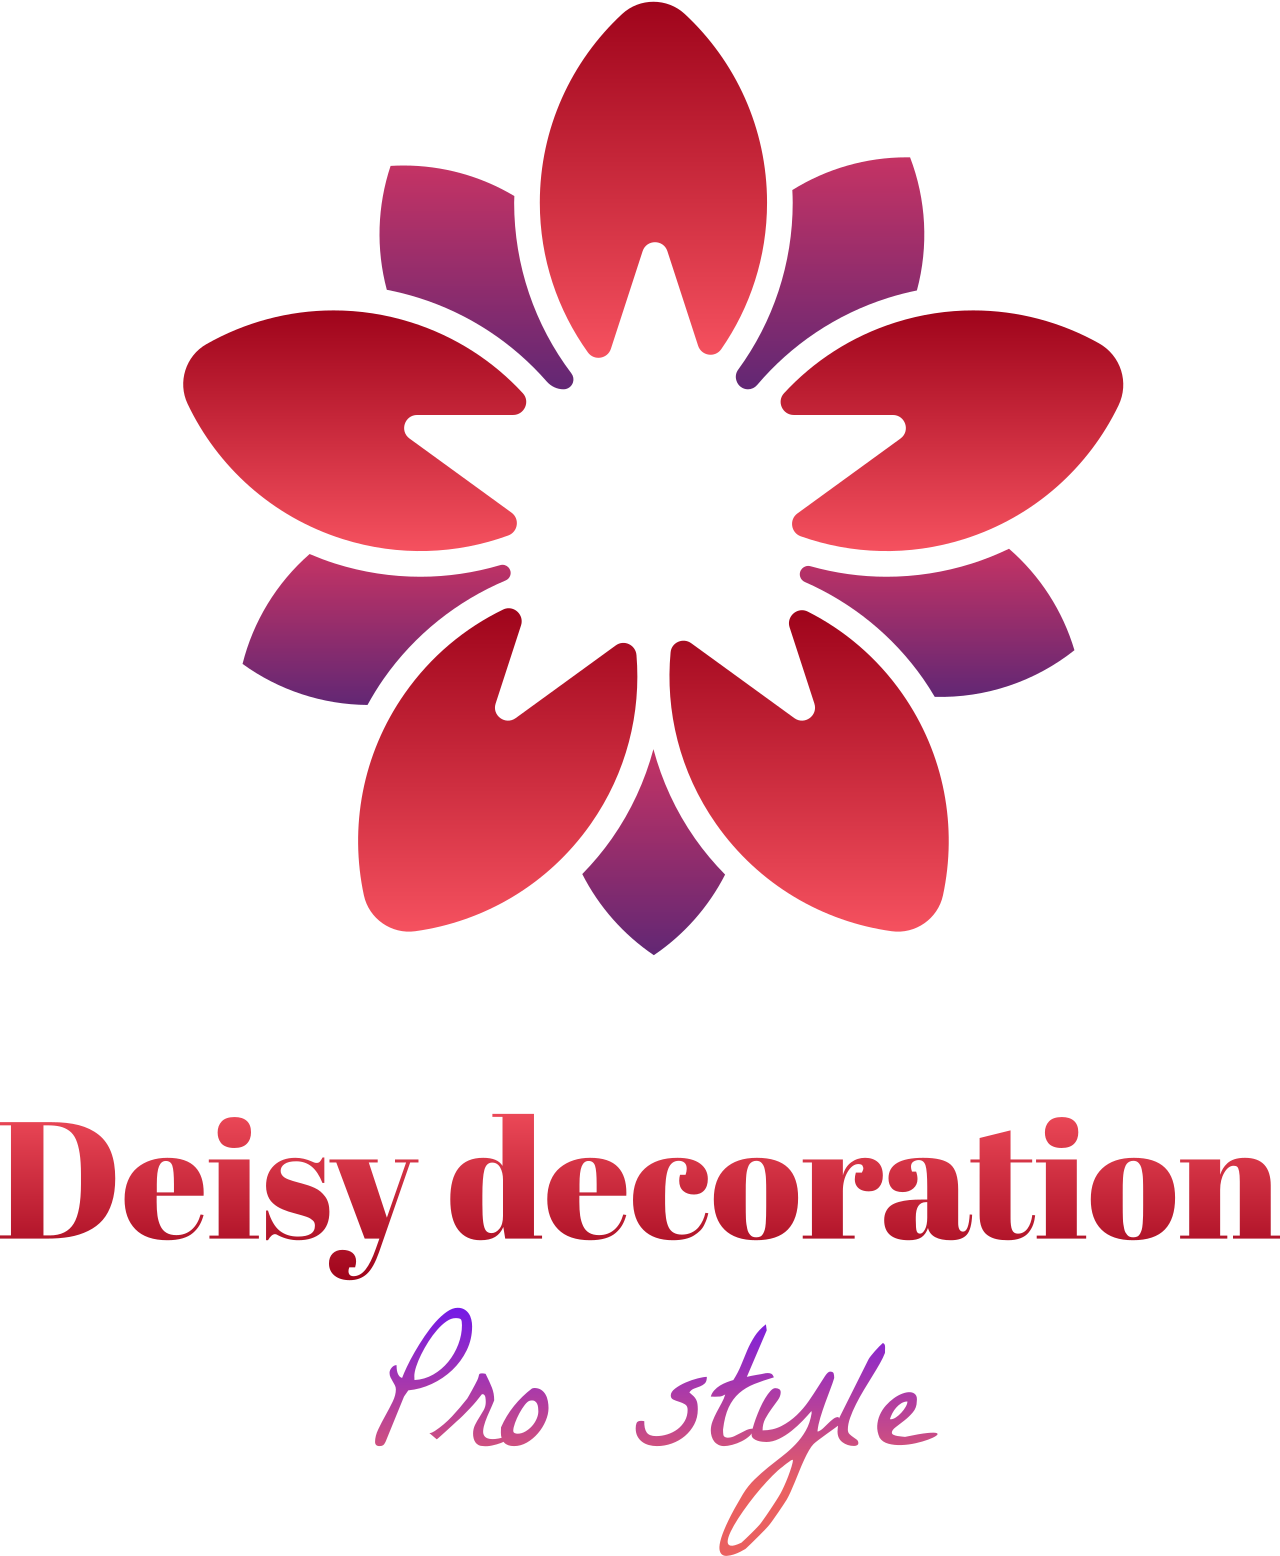 Deisy decoration 's web page